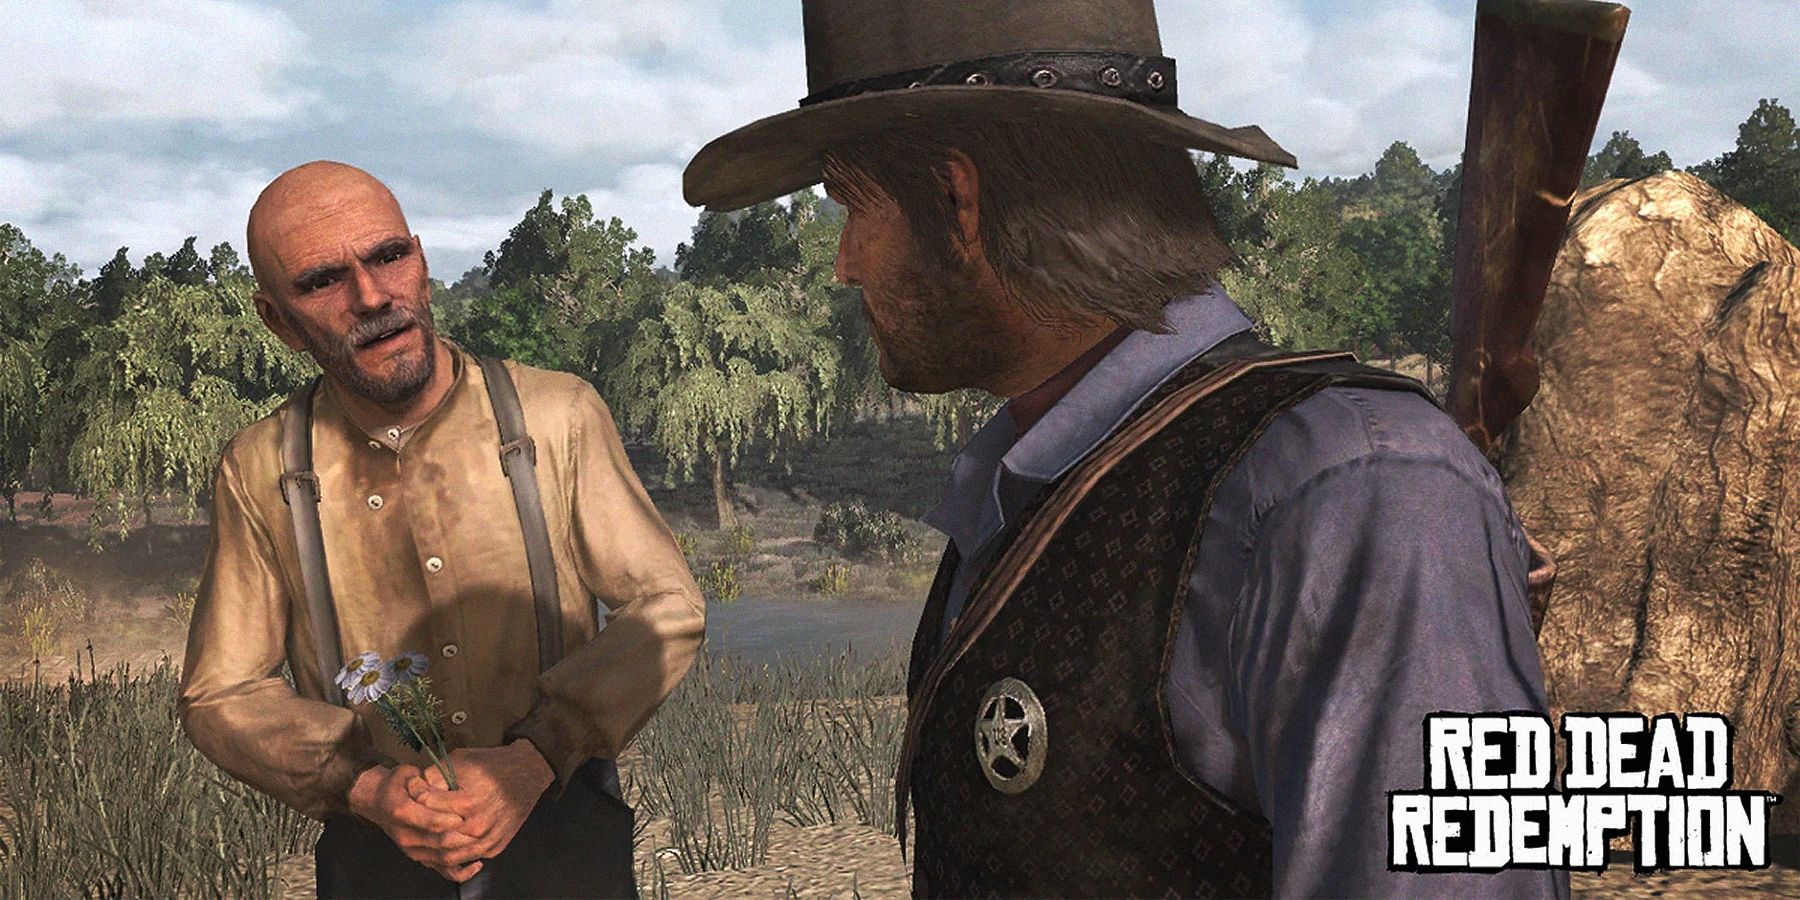 What Happens Between Red Dead Redemption's Big Years